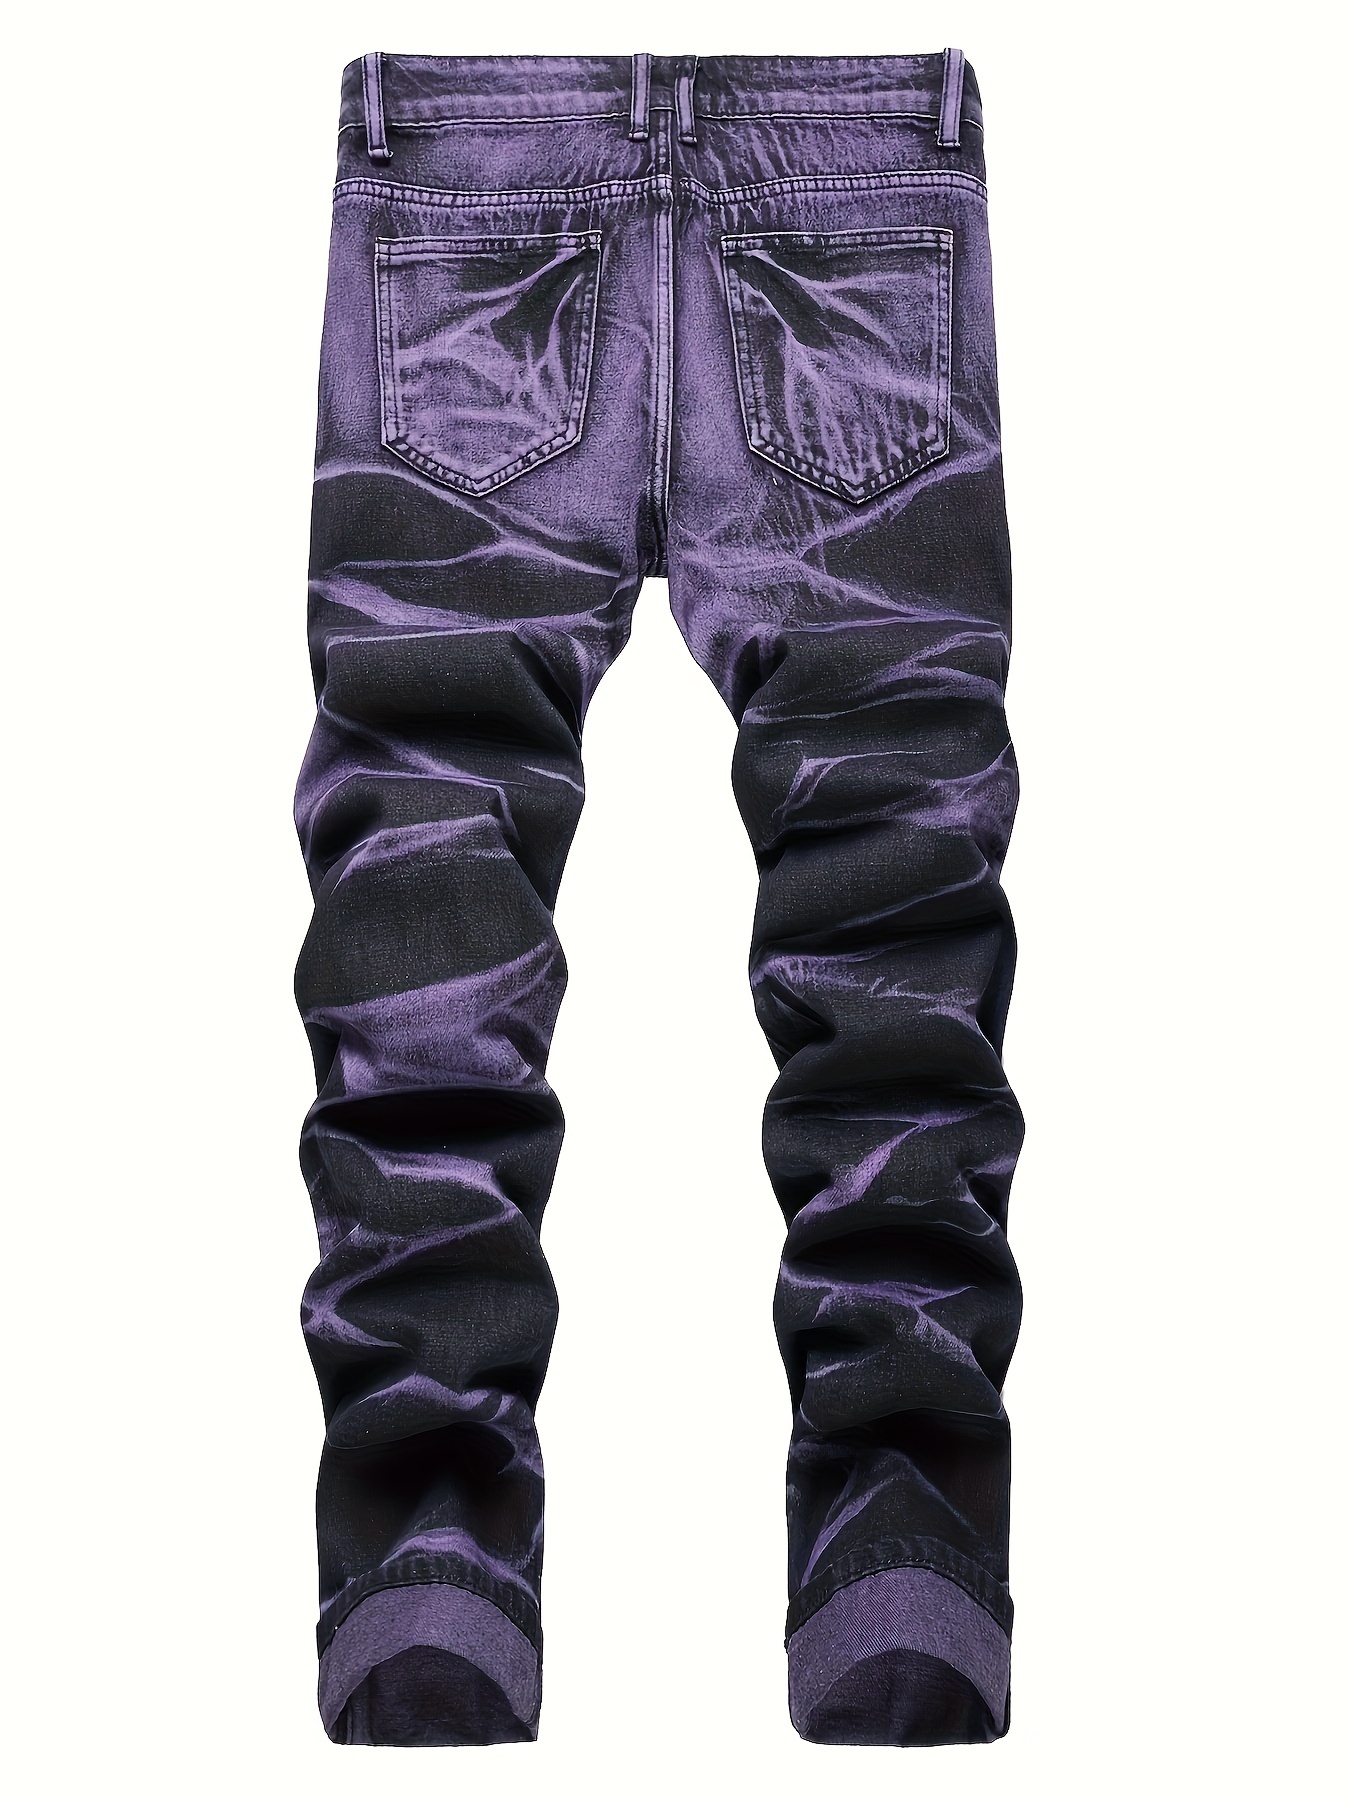 Designer Purple Brand Jeans for Men Women Pants Purple Jeans Summer Hole  High Quality Embroidery Purple Jeans Denim Trousers Mens Purple Jeans 9972